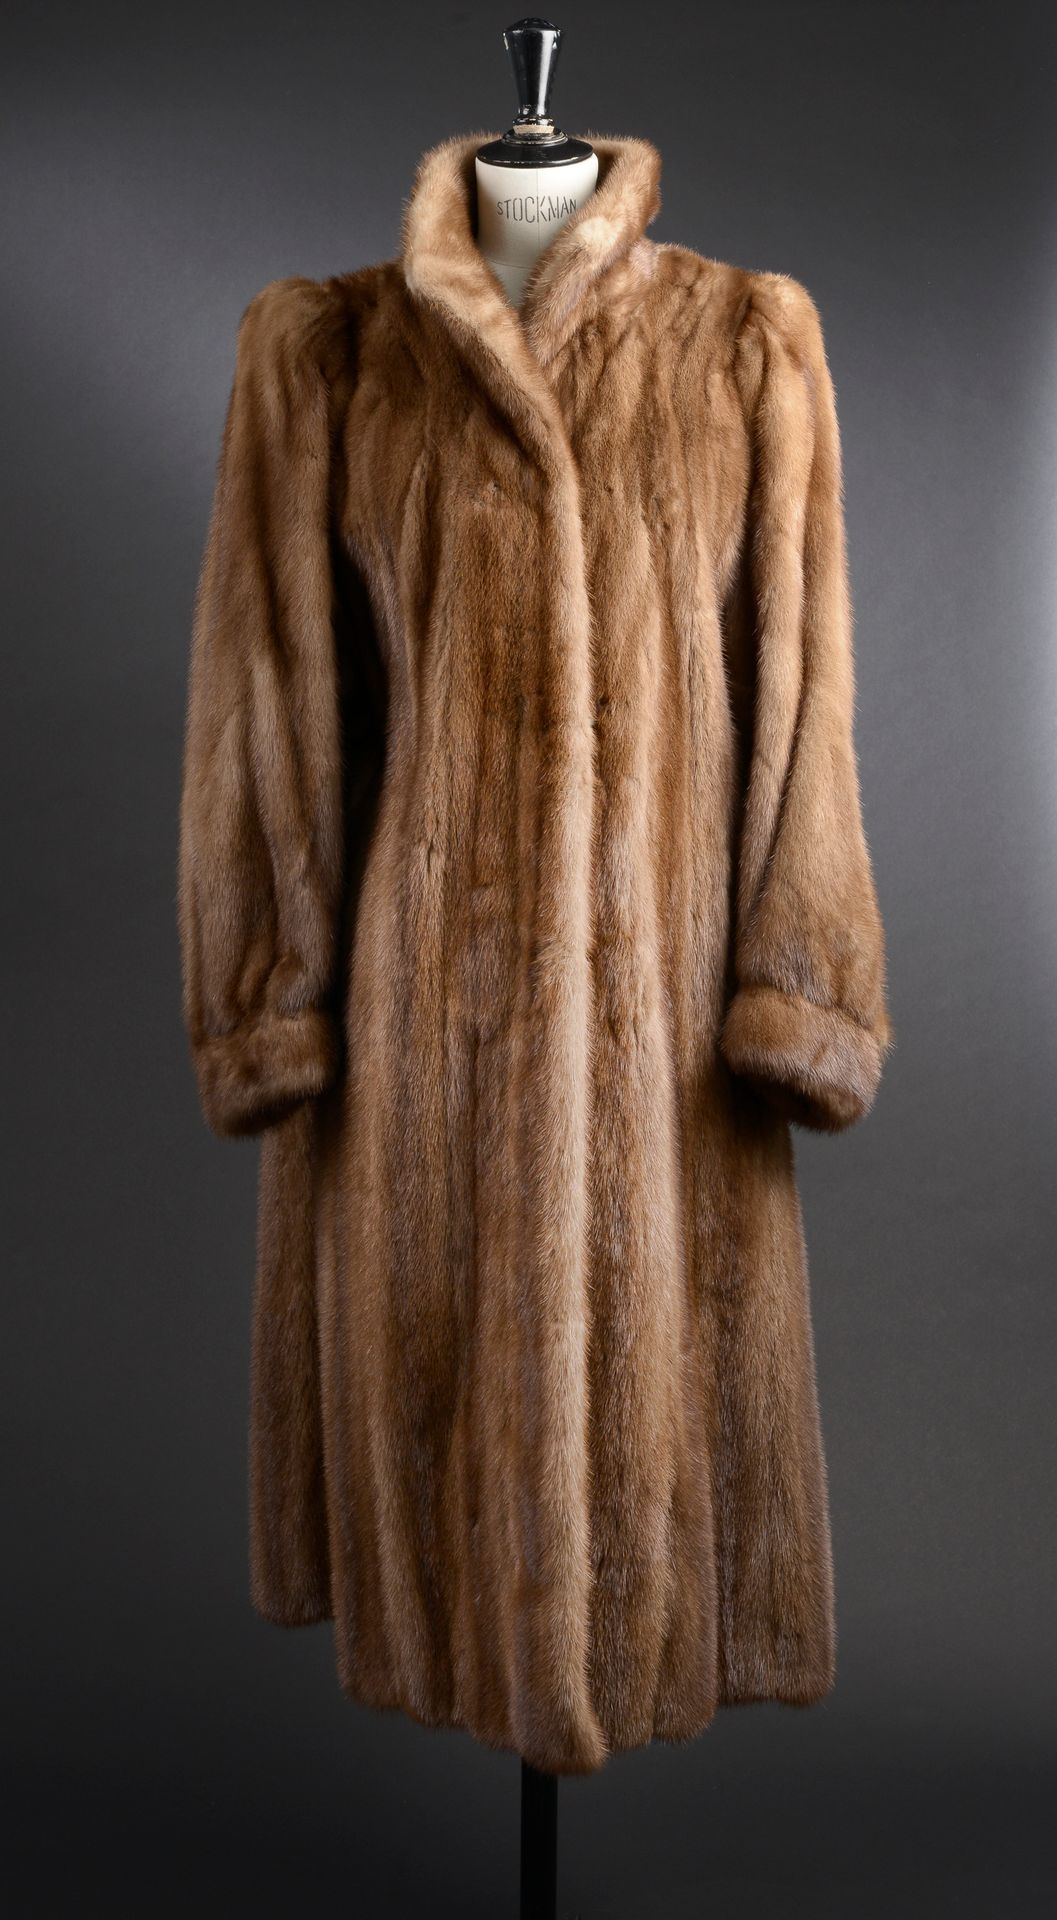 Null E.P. COAT - Estimated size: 42
Long coat in light mink, high collar, slight&hellip;